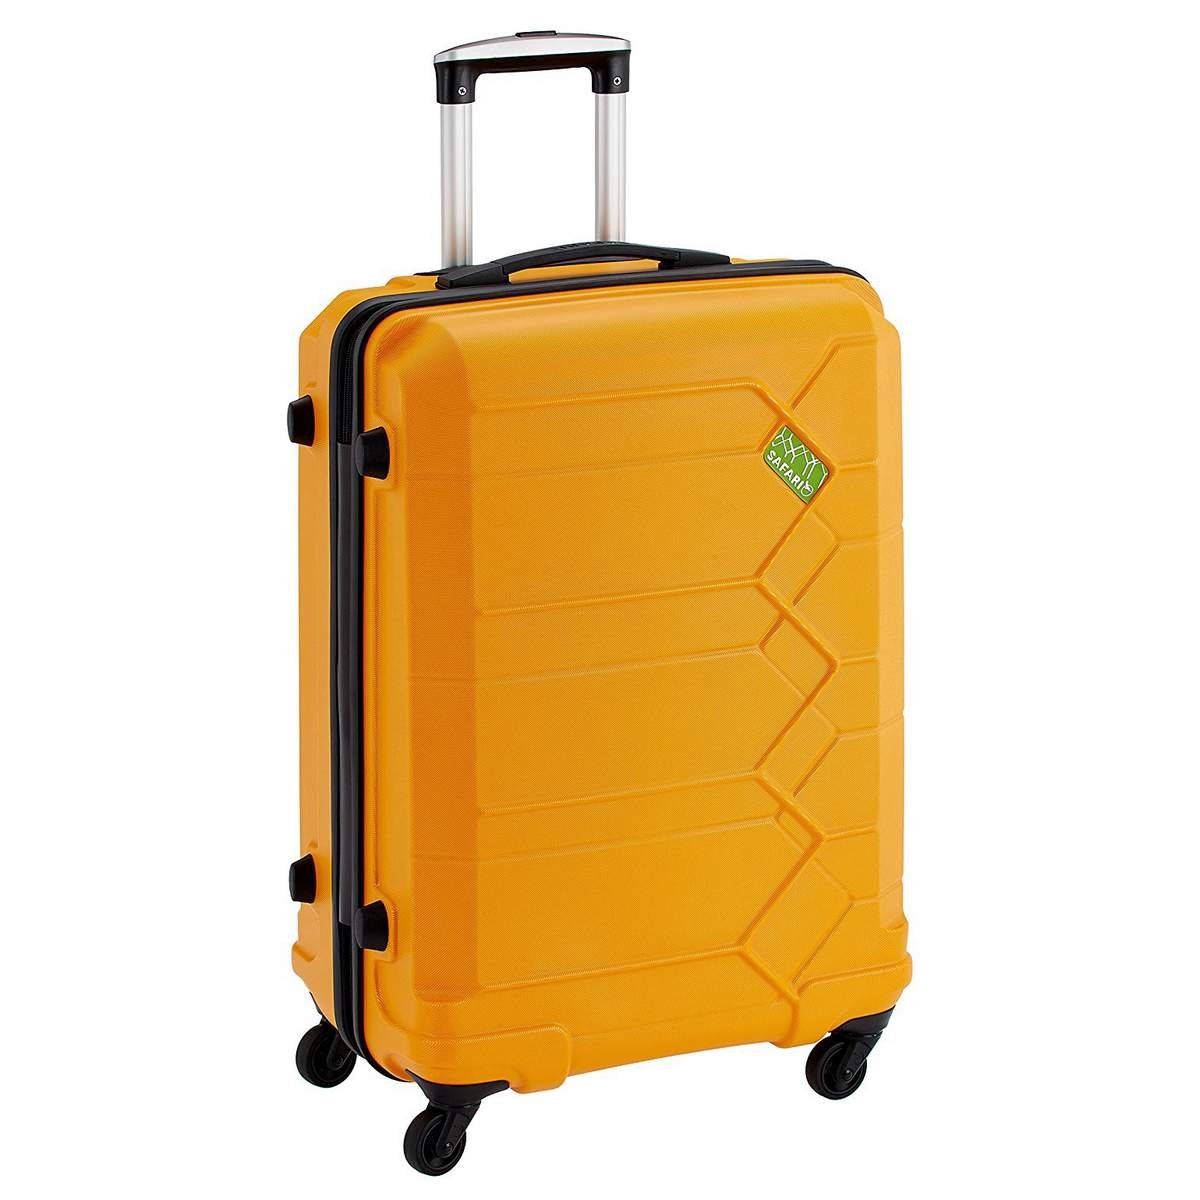 safari luggage company wiki